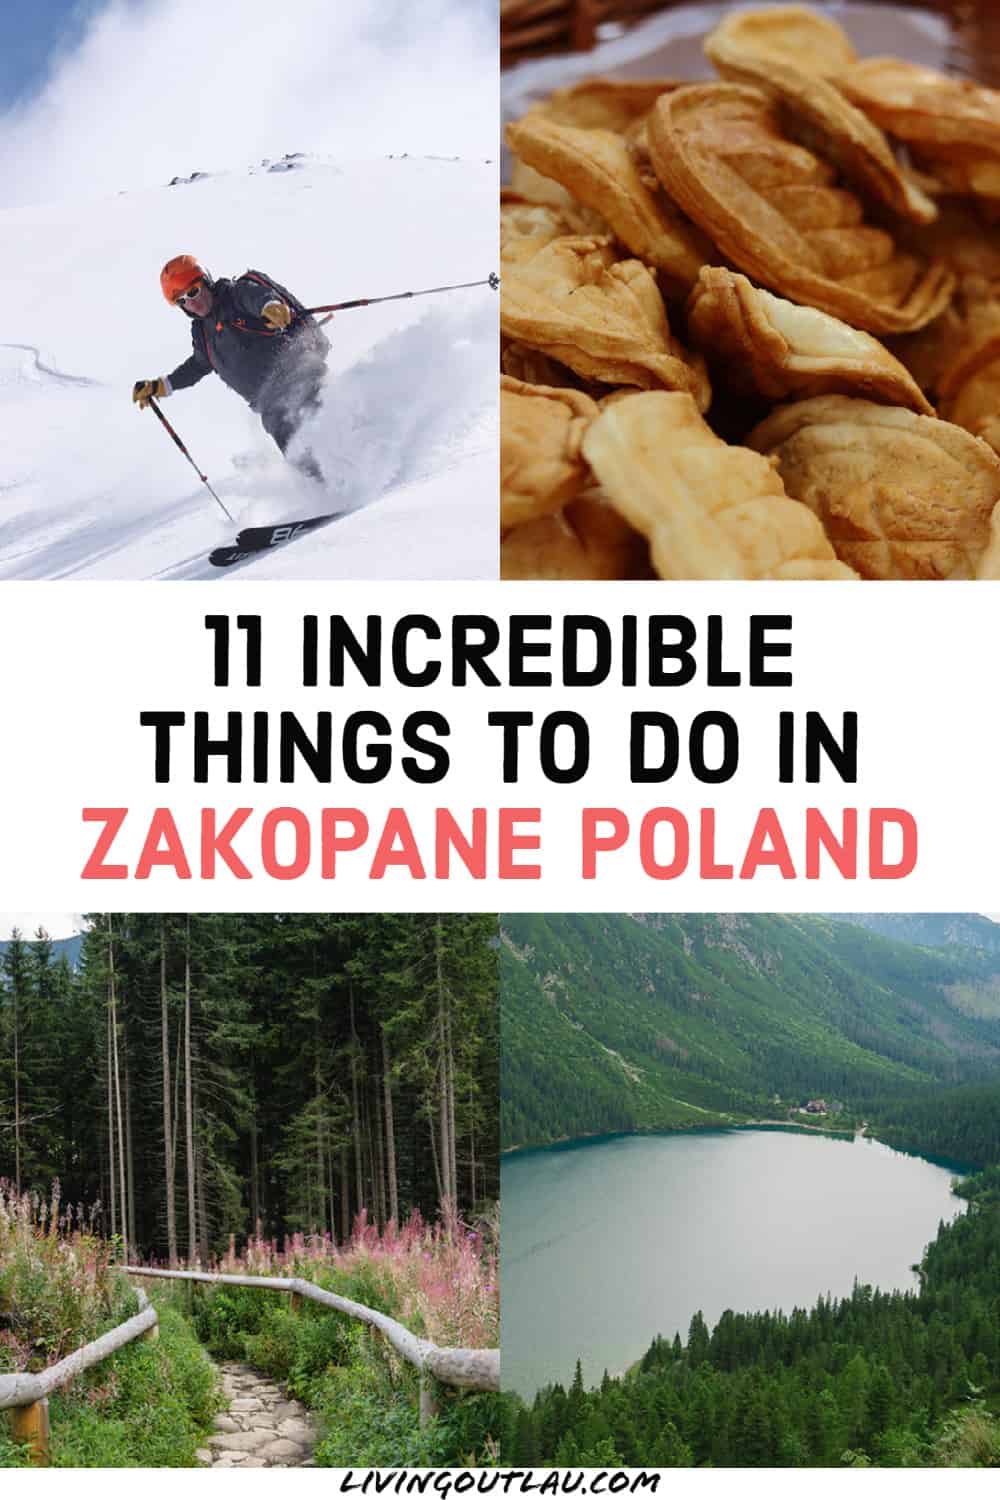 Things To Do In Zakopane Poland Pinterest